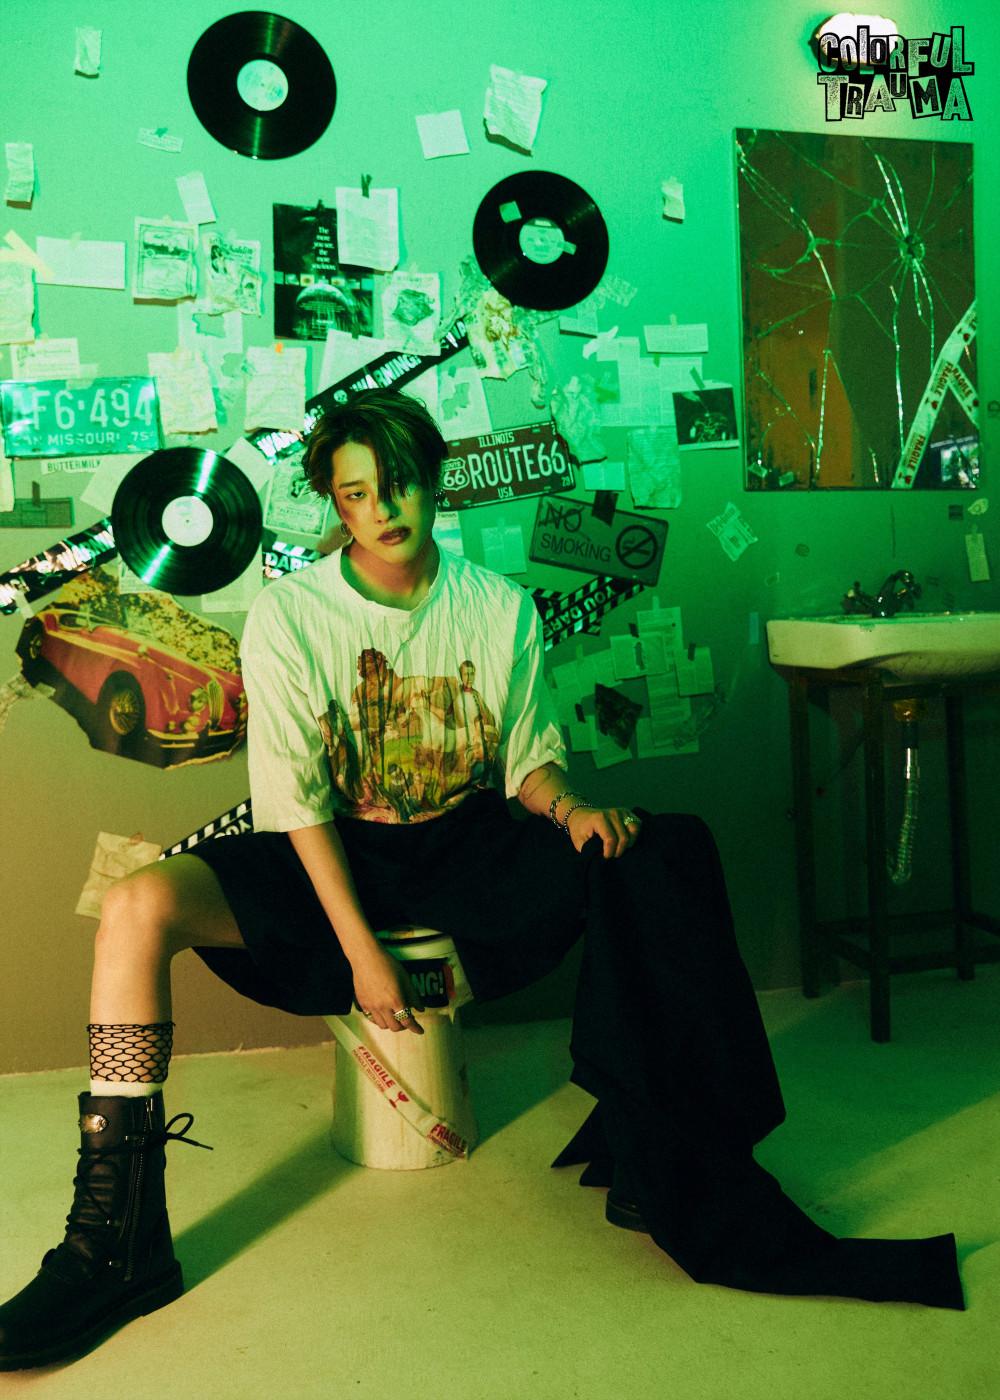 [Камбэк] WOODZ мини-альбом «Colorful Trauma»: музыкальный клип